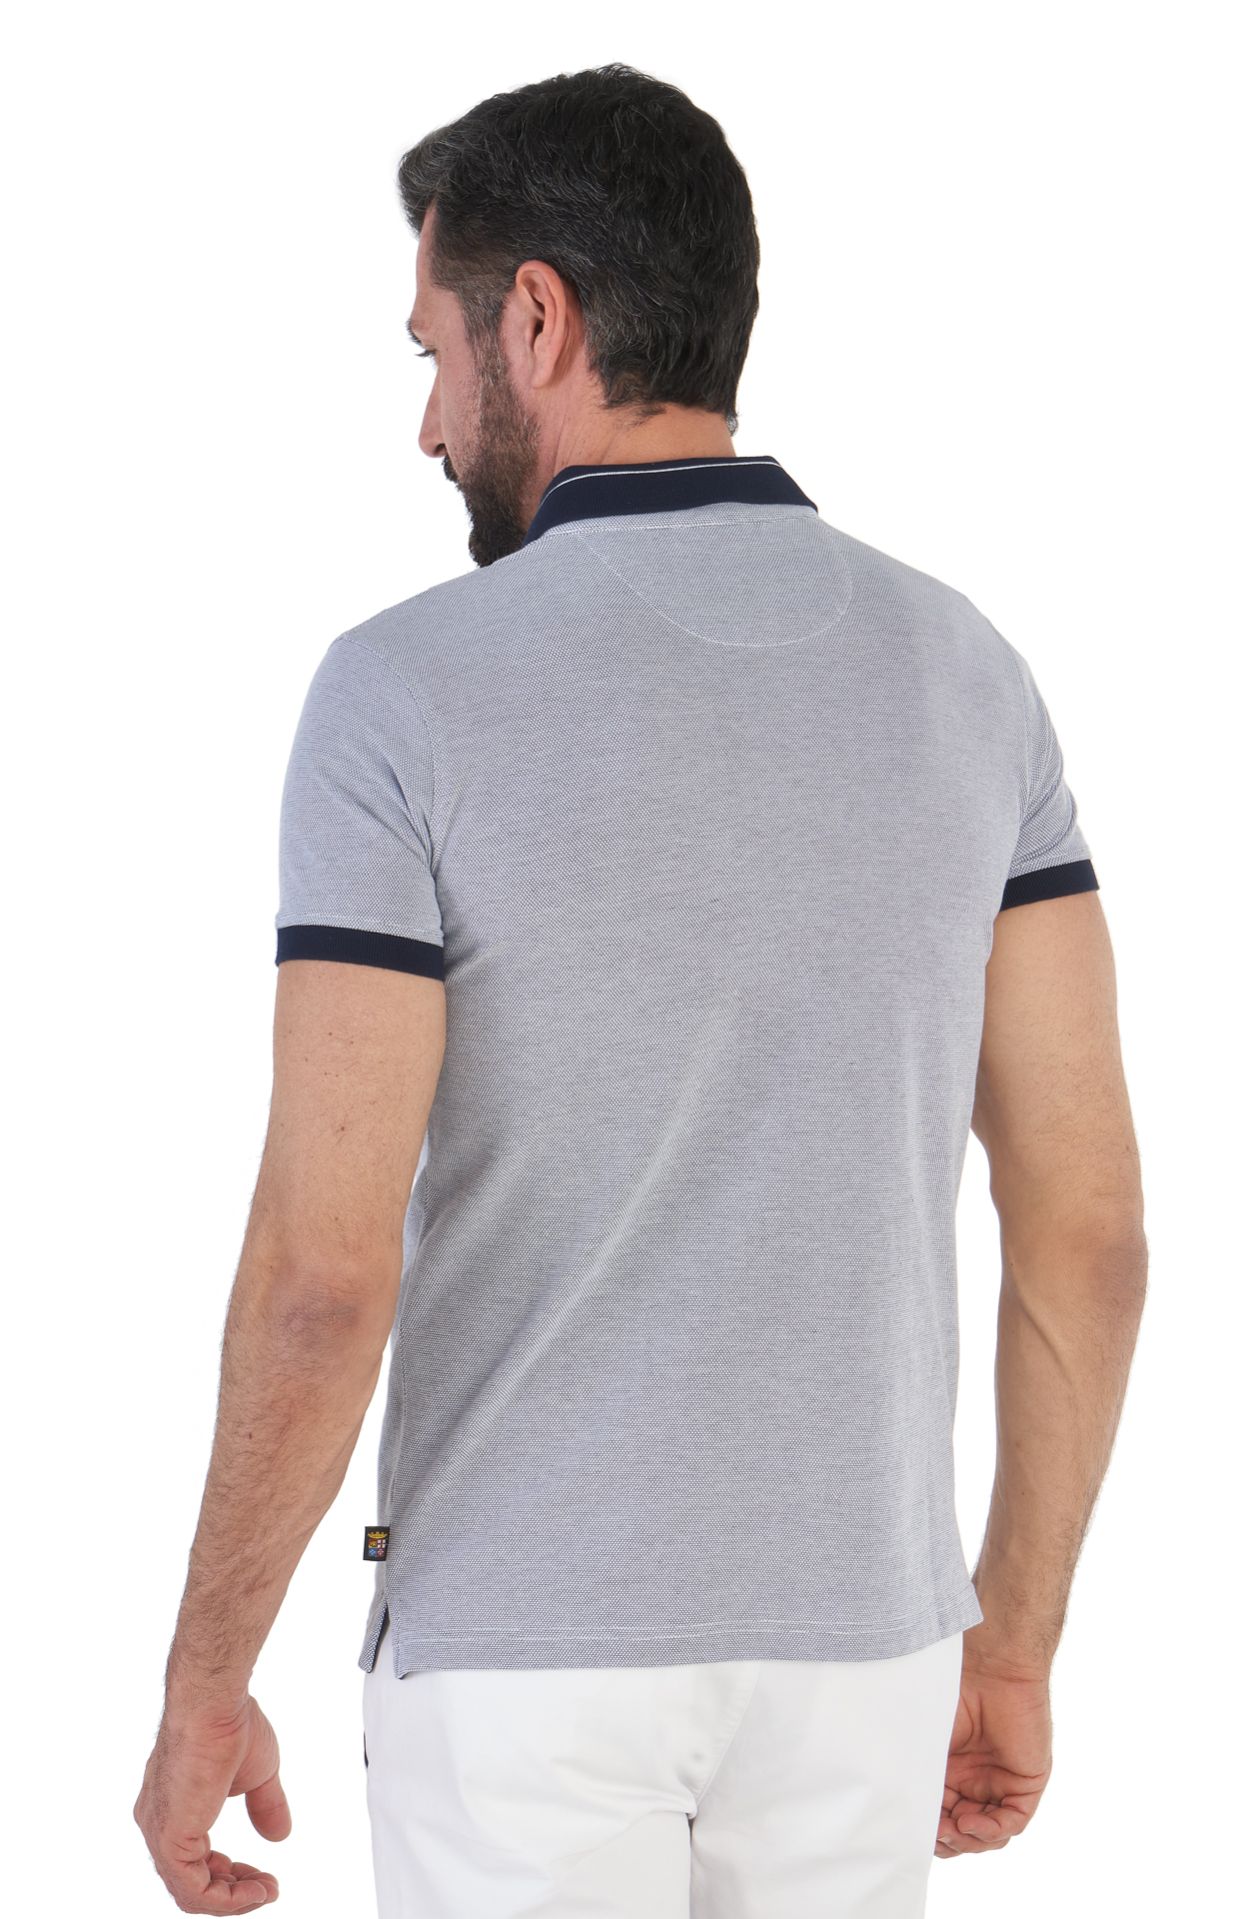 Amerigo Vespucci cotton polo shirt